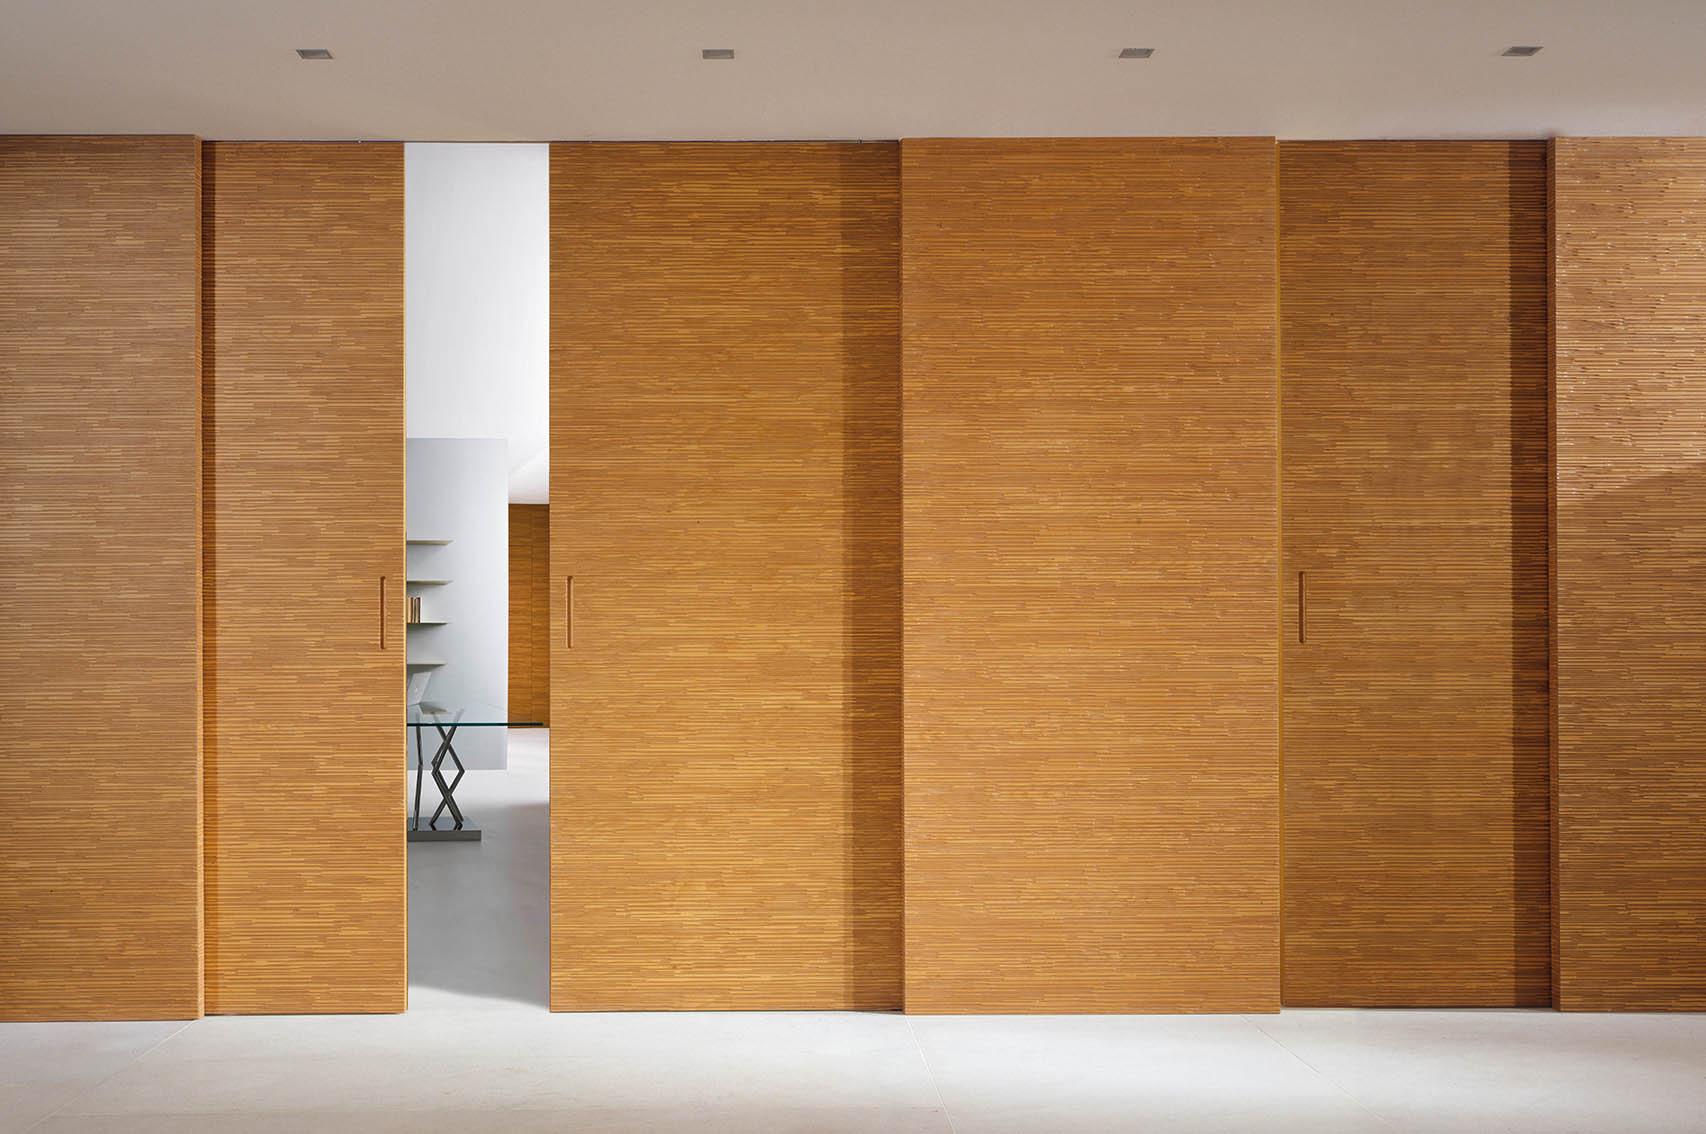 Laurameroni luxury modern integrated doors for a bespoke artisanal interior design and decor